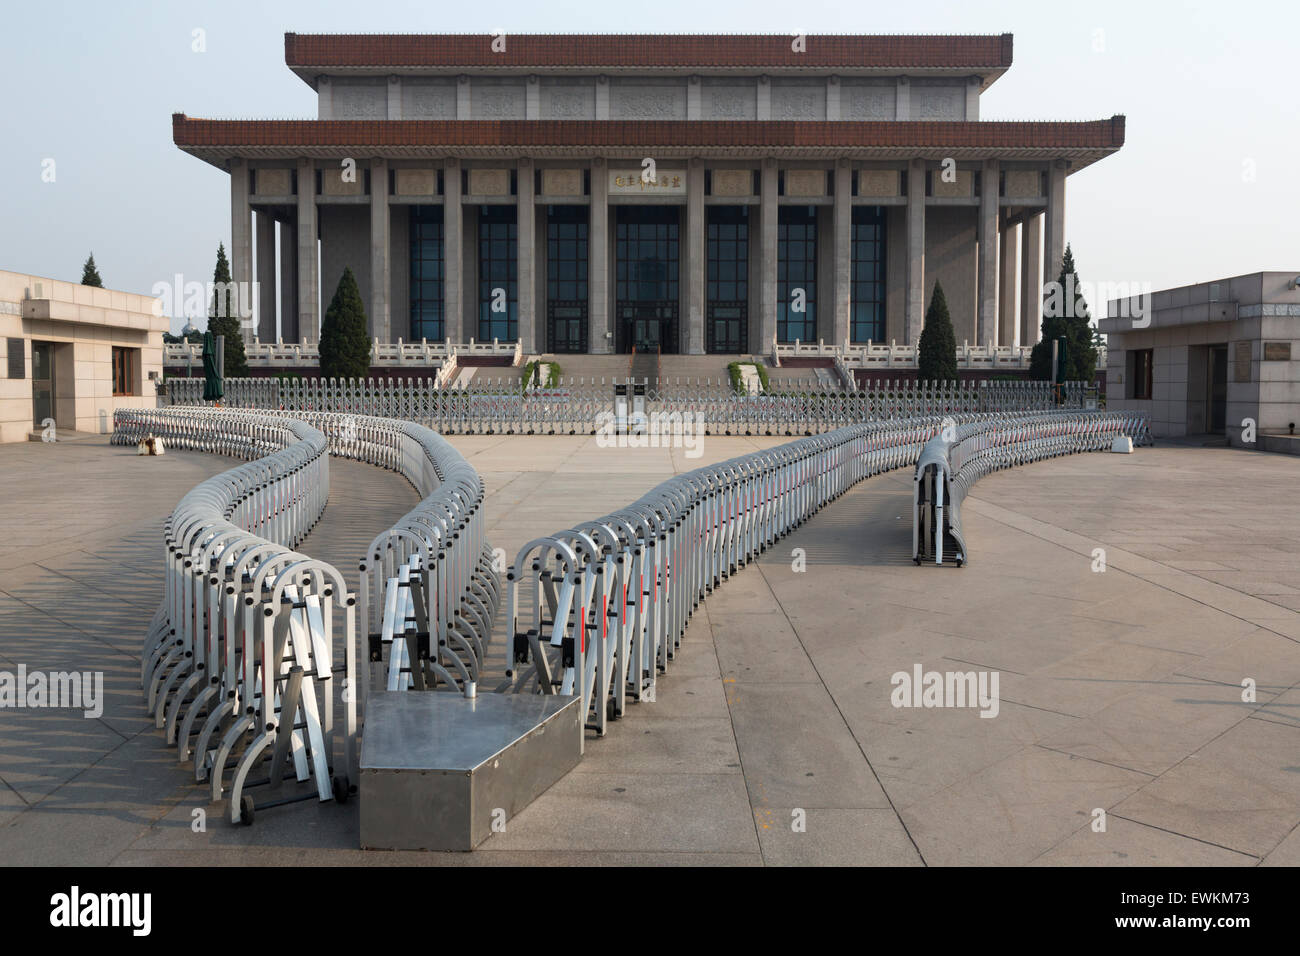 Mausoleum von Mao Zedong (Chairman Mao Memorial Hall) am Tiananmen-Platz, Beijing Stockfoto